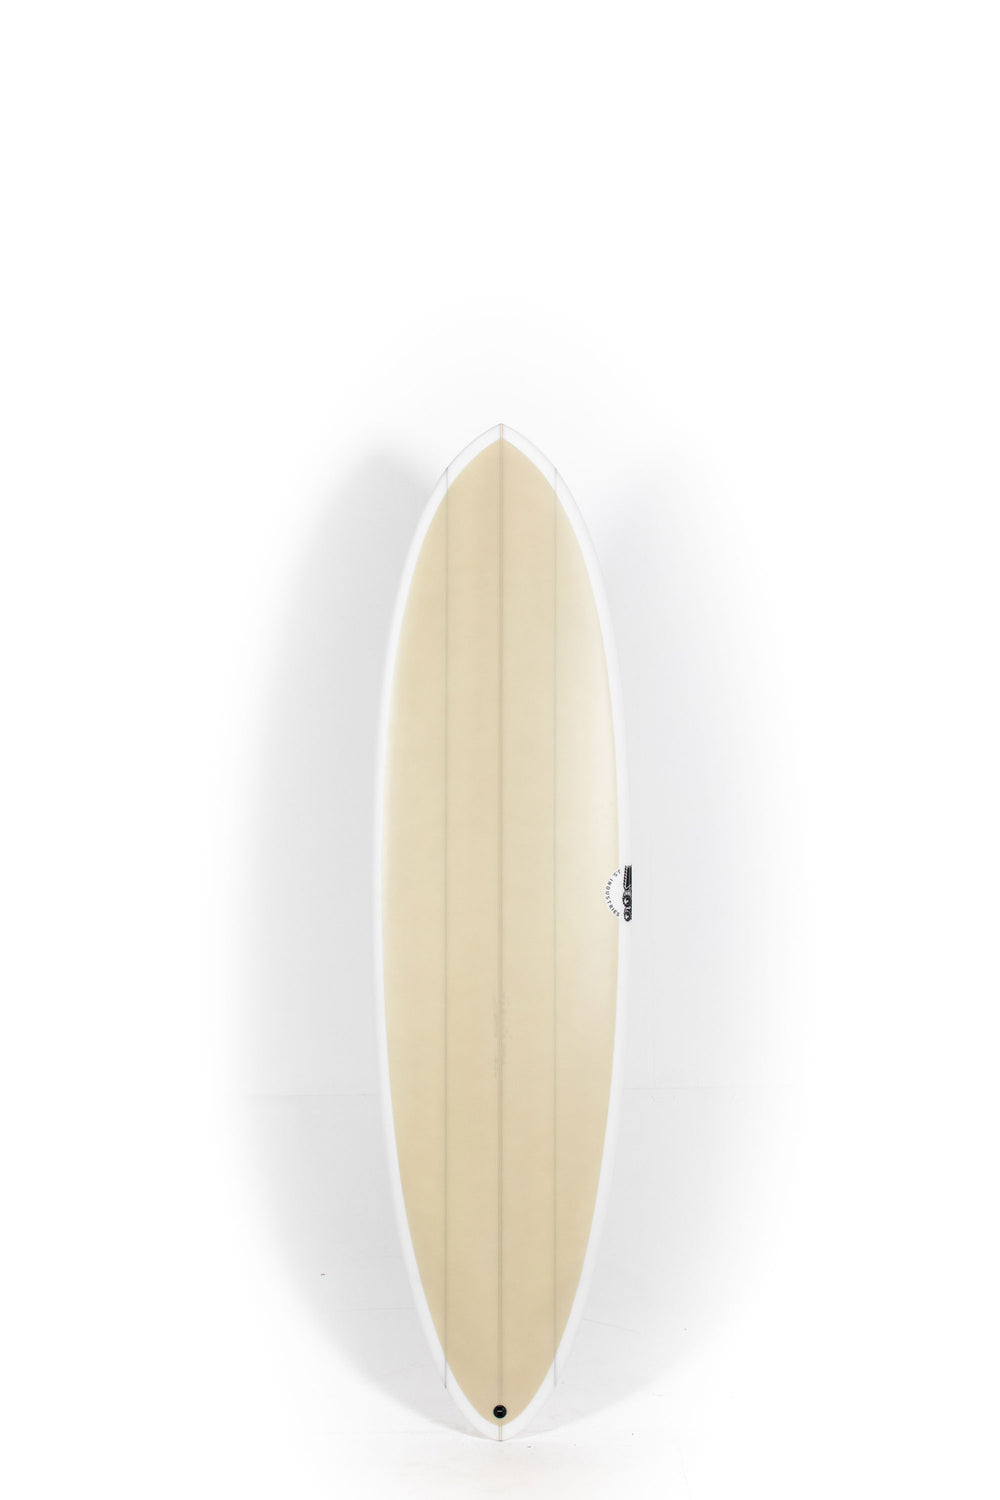 Pukas Surf Shop - JS Surfboards - BIG BARON - 6'4